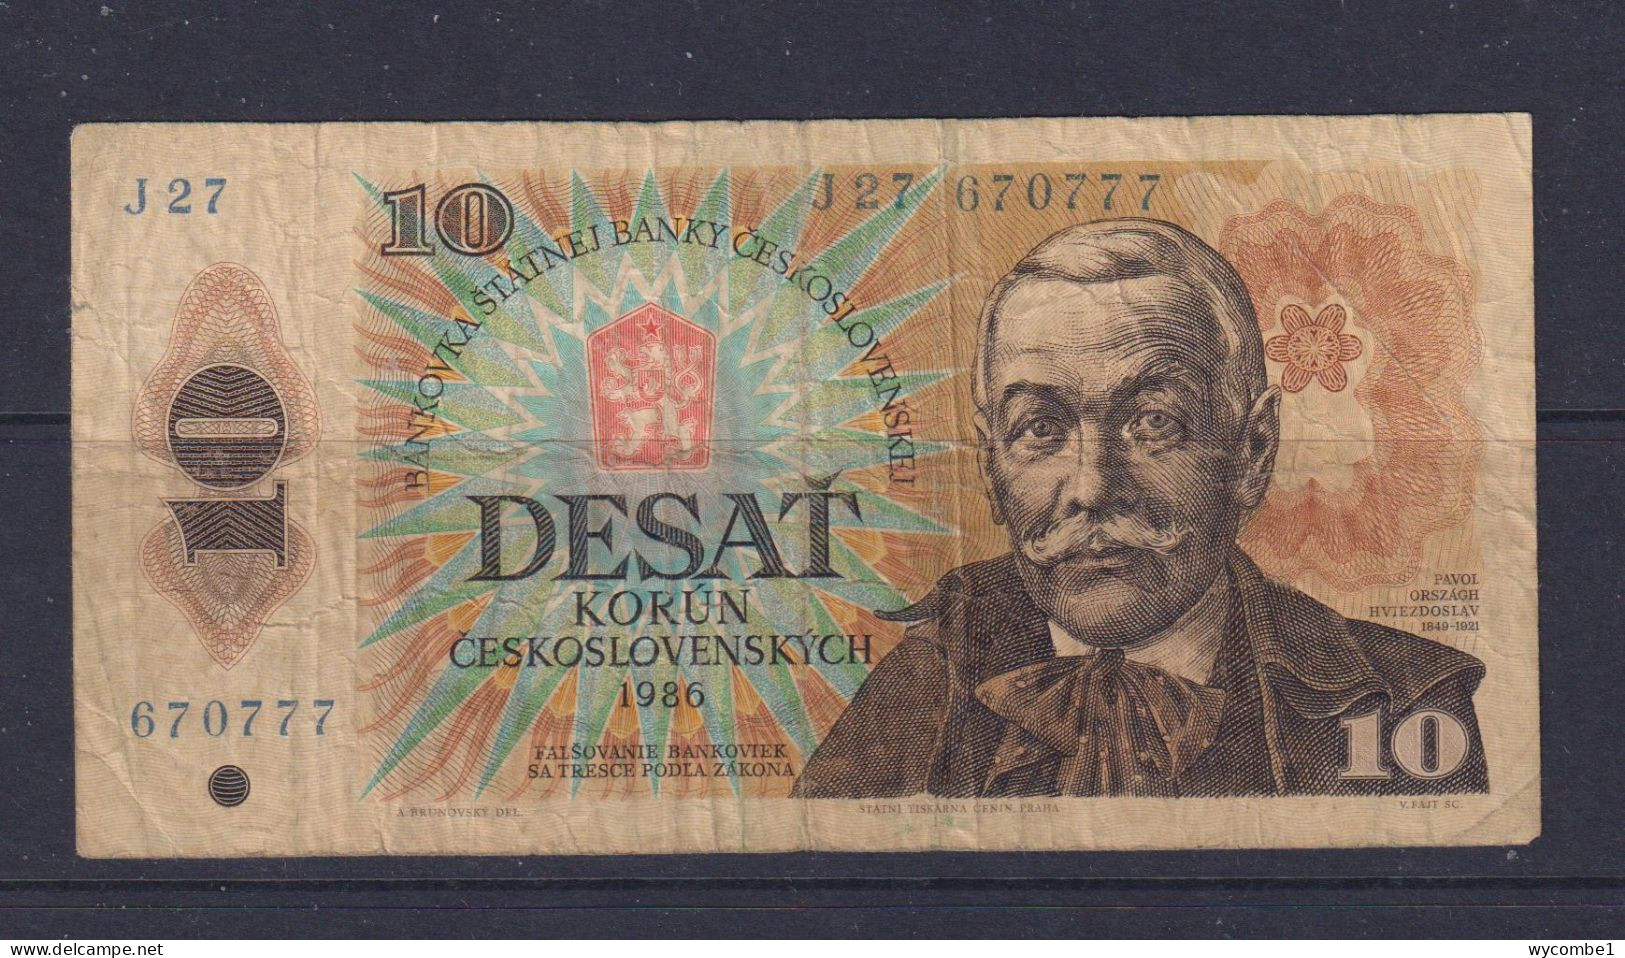 CZECHOSLOVAKIA - 1986 10 Korun Circulated Banknote - Czechoslovakia